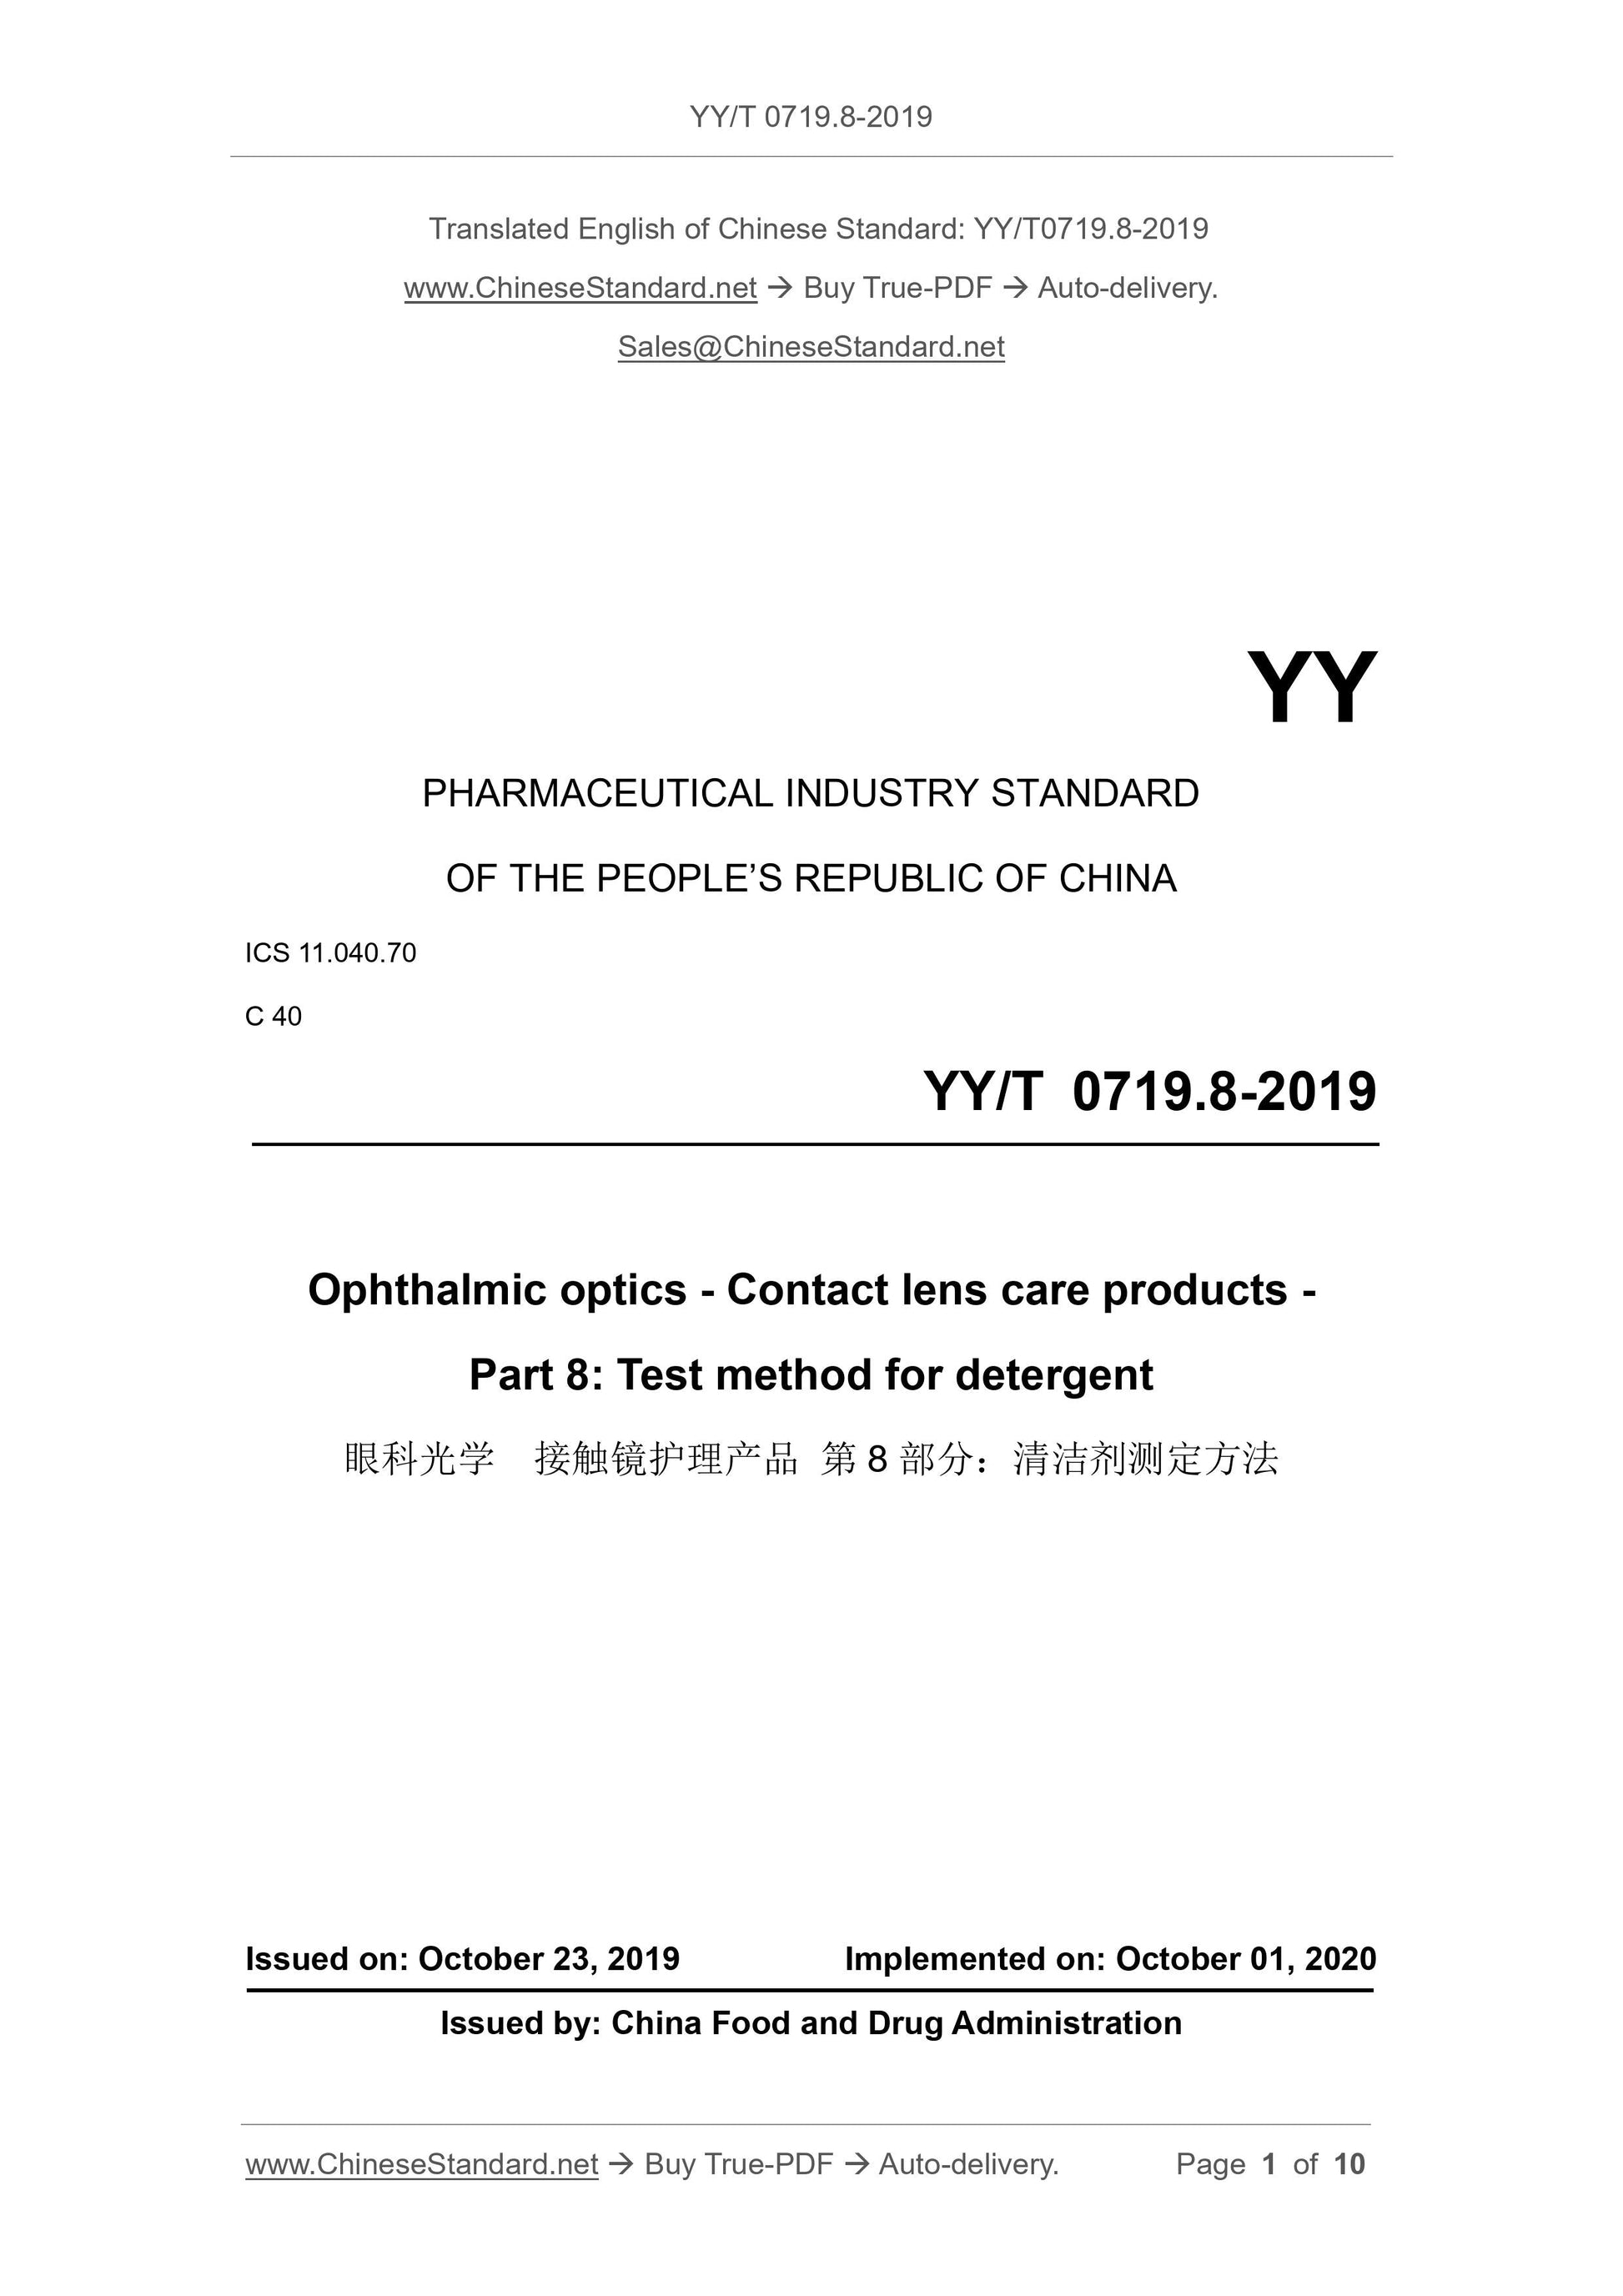 YY/T 0719.8-2019 Page 1